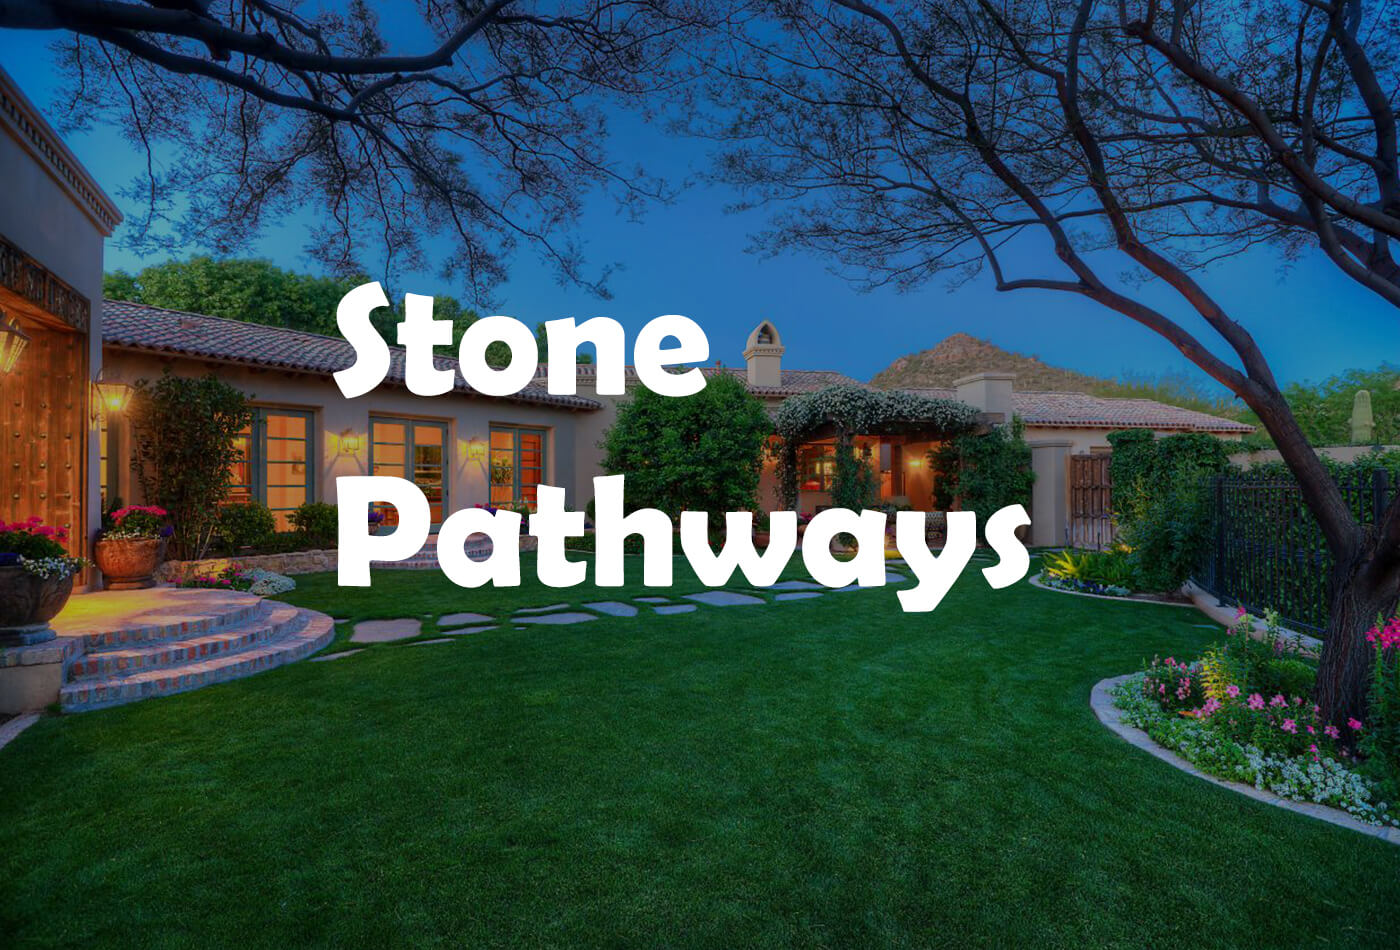 Stone Pathways & Decor Ideas With Nature's Hit!